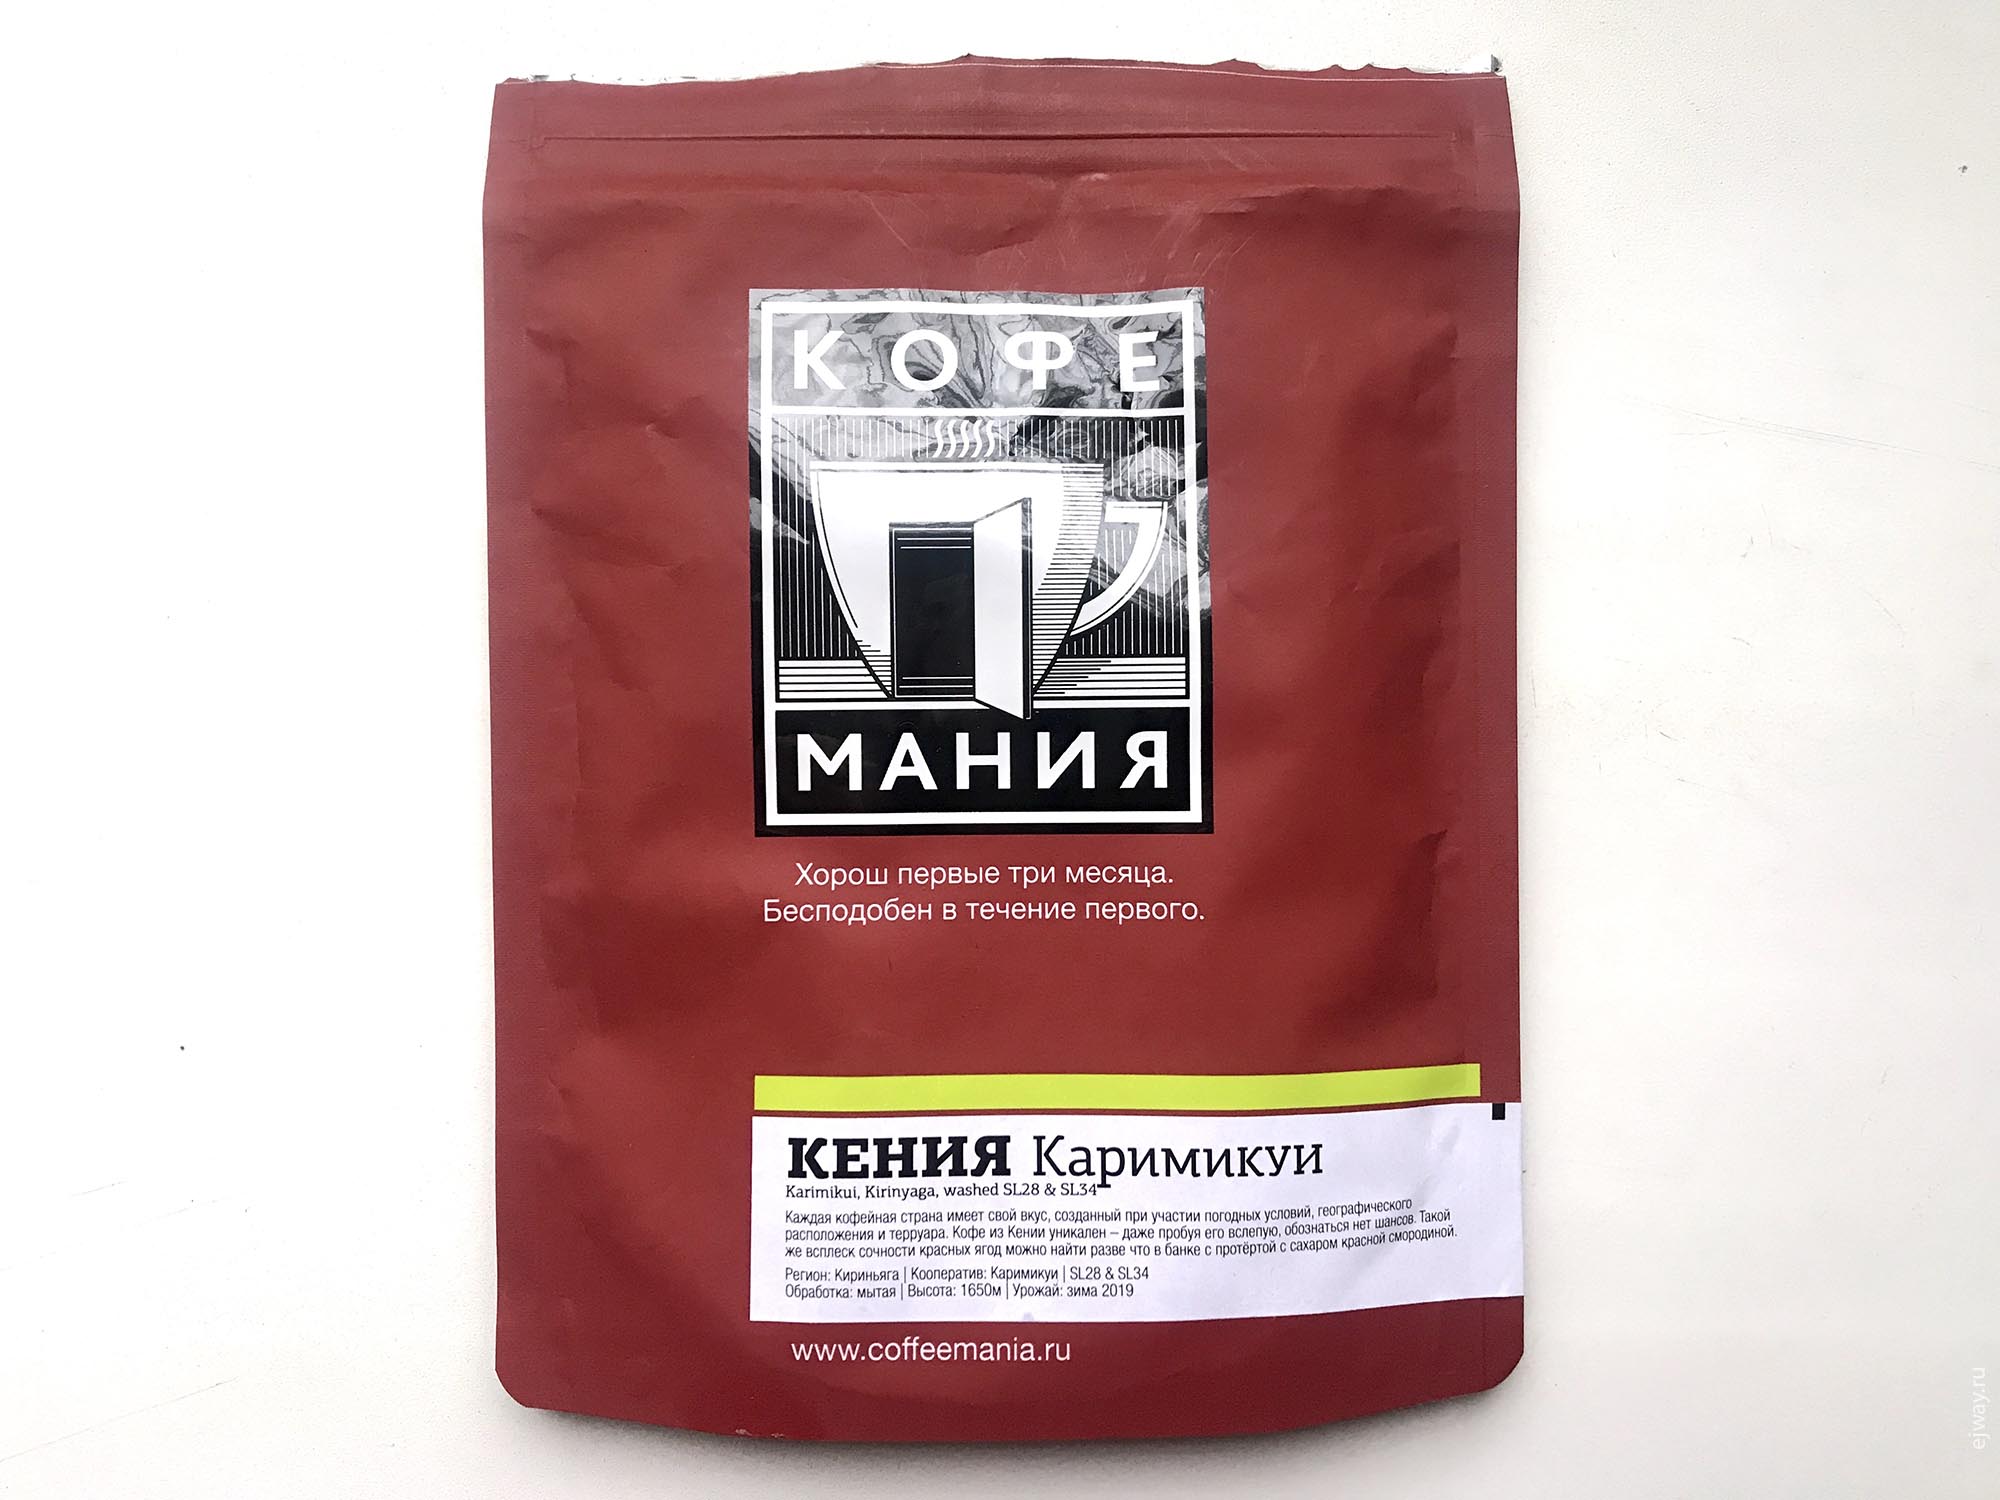 Россия, Москва, Кения Каримикуи. Кофе мания, ejway.ru, кофе, кофе в зернах на 4+, кофемания